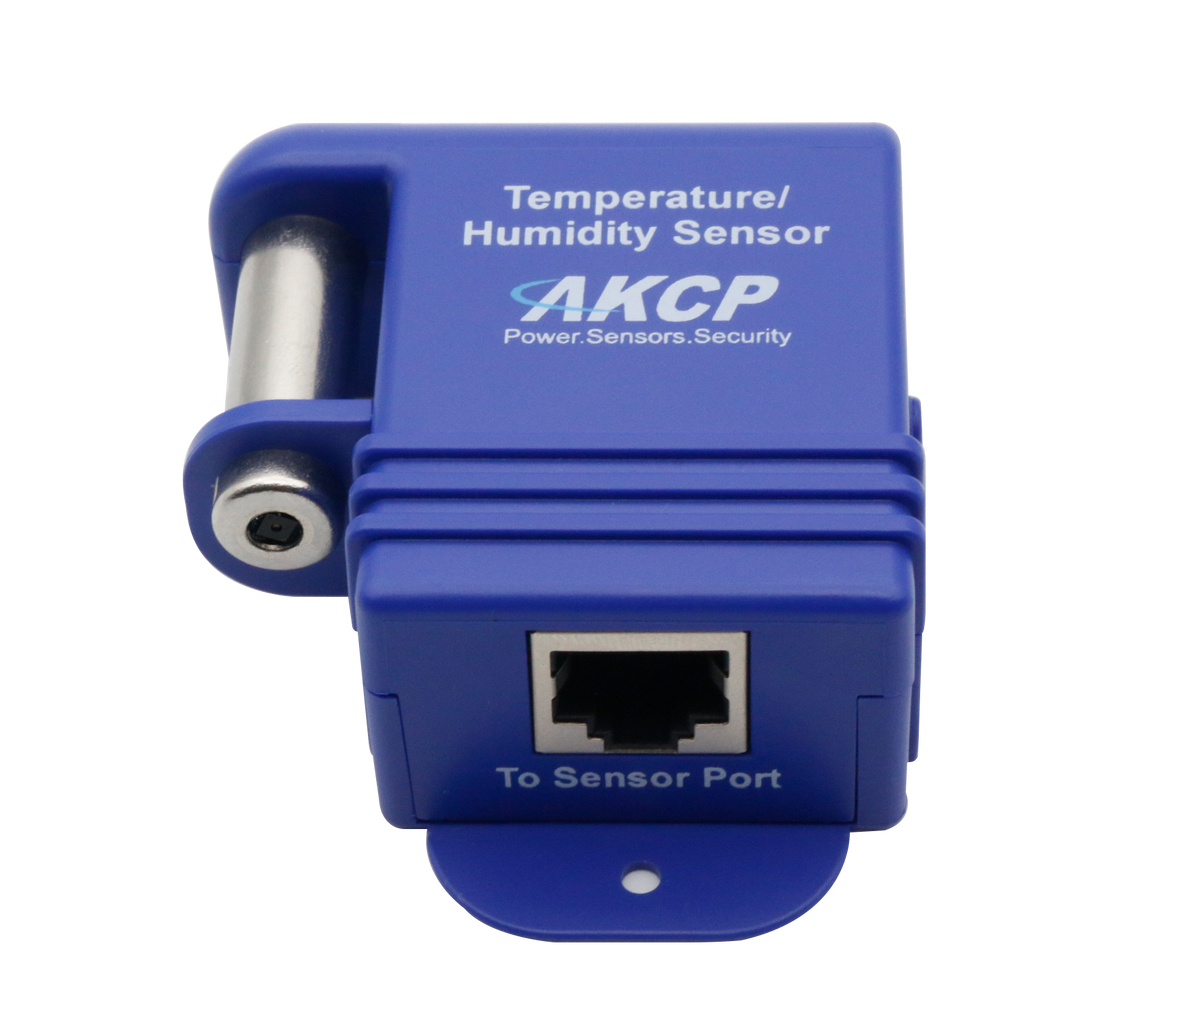 Temperature & Humdity Sensor